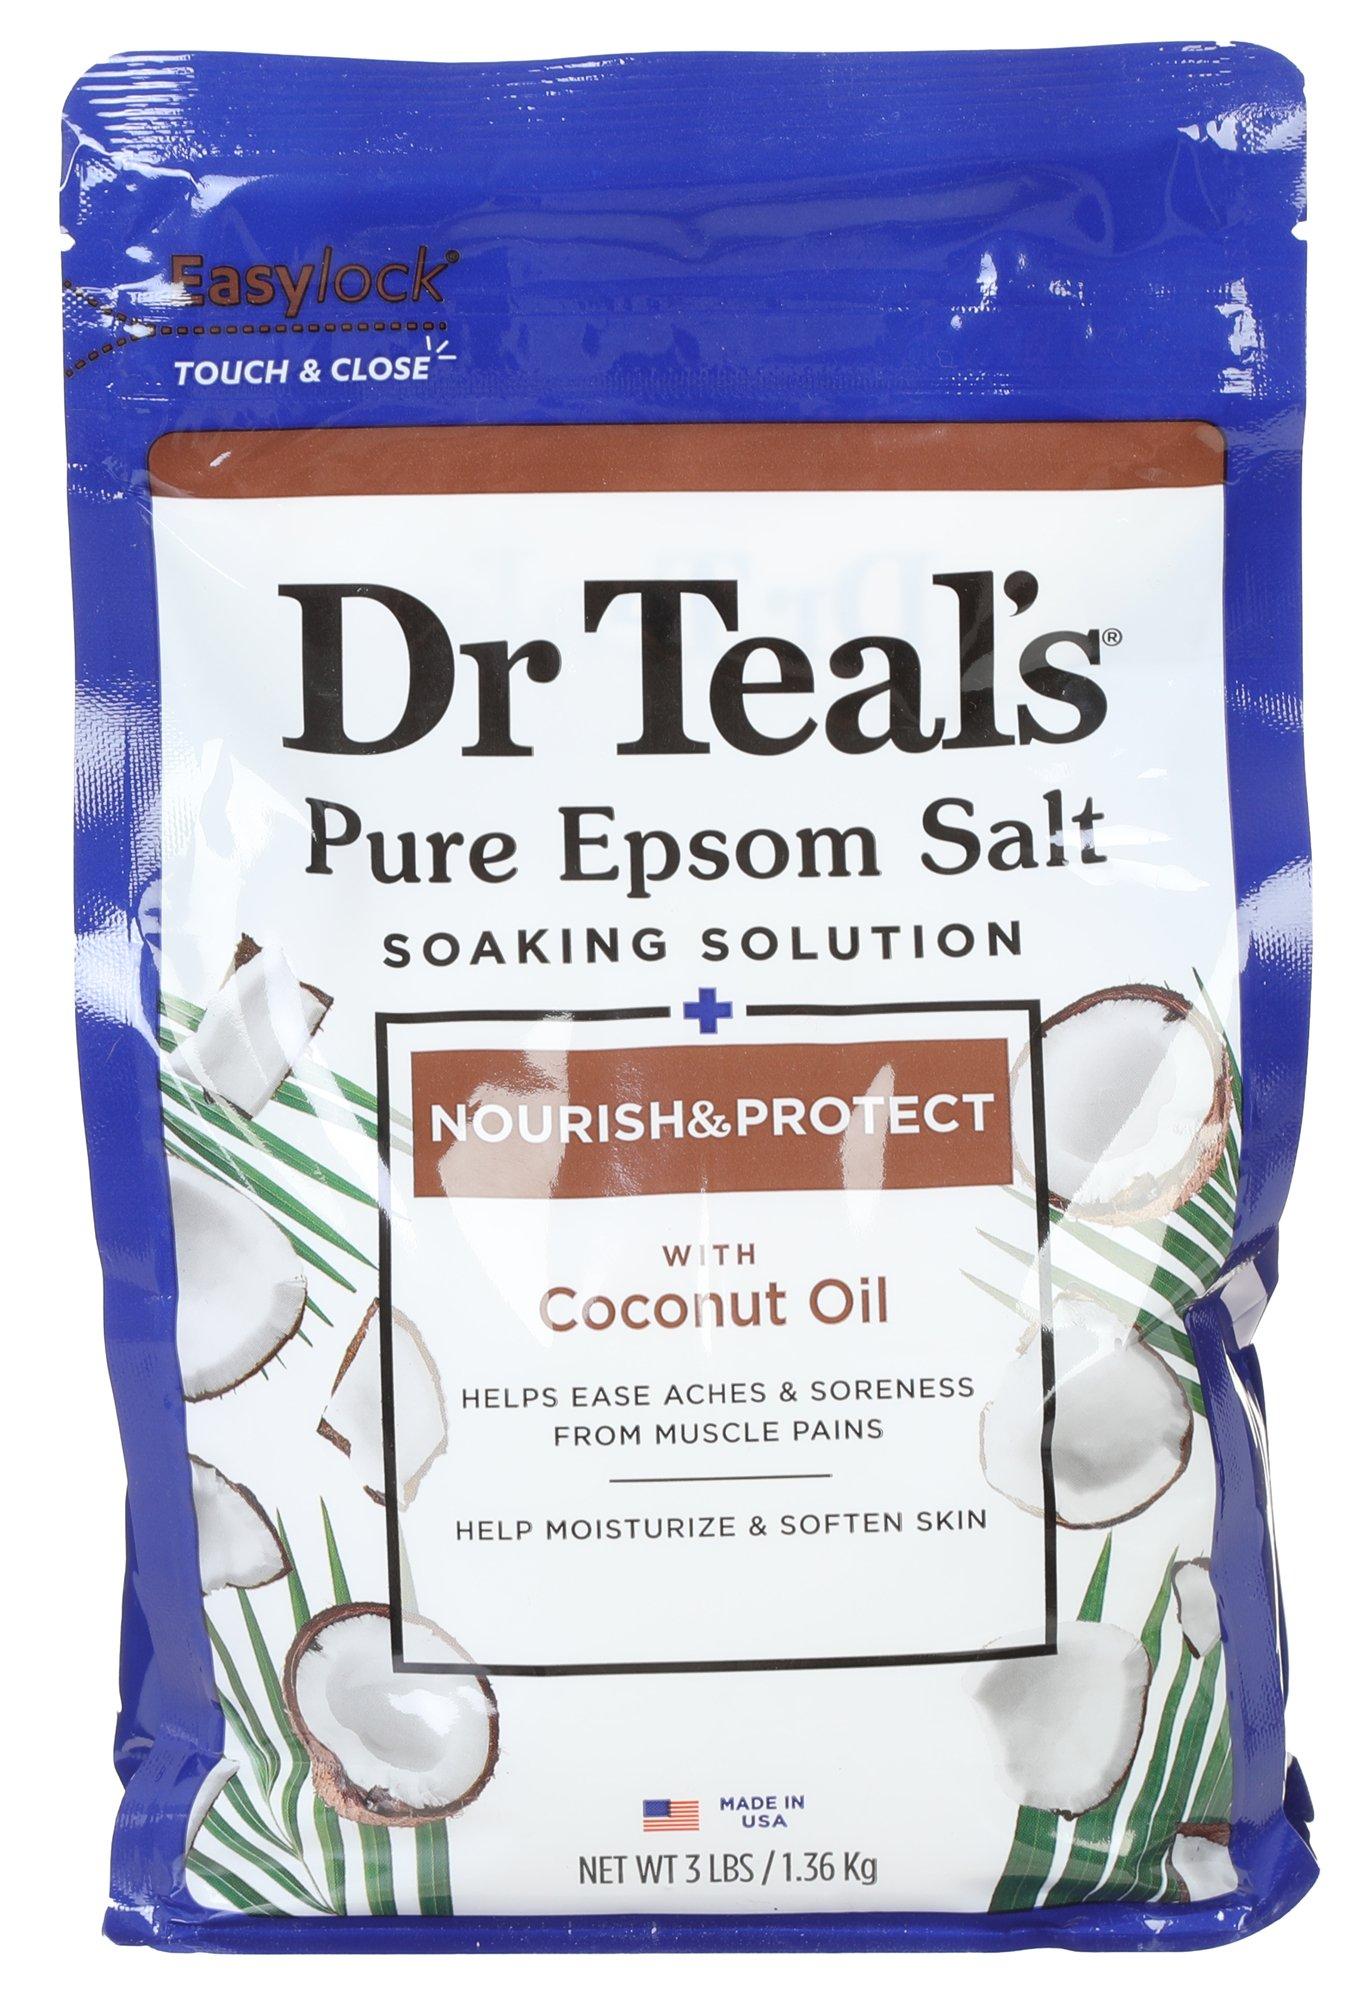 Dr Teals Nourish & Protect Pure Epsom Salt Soaking Solution